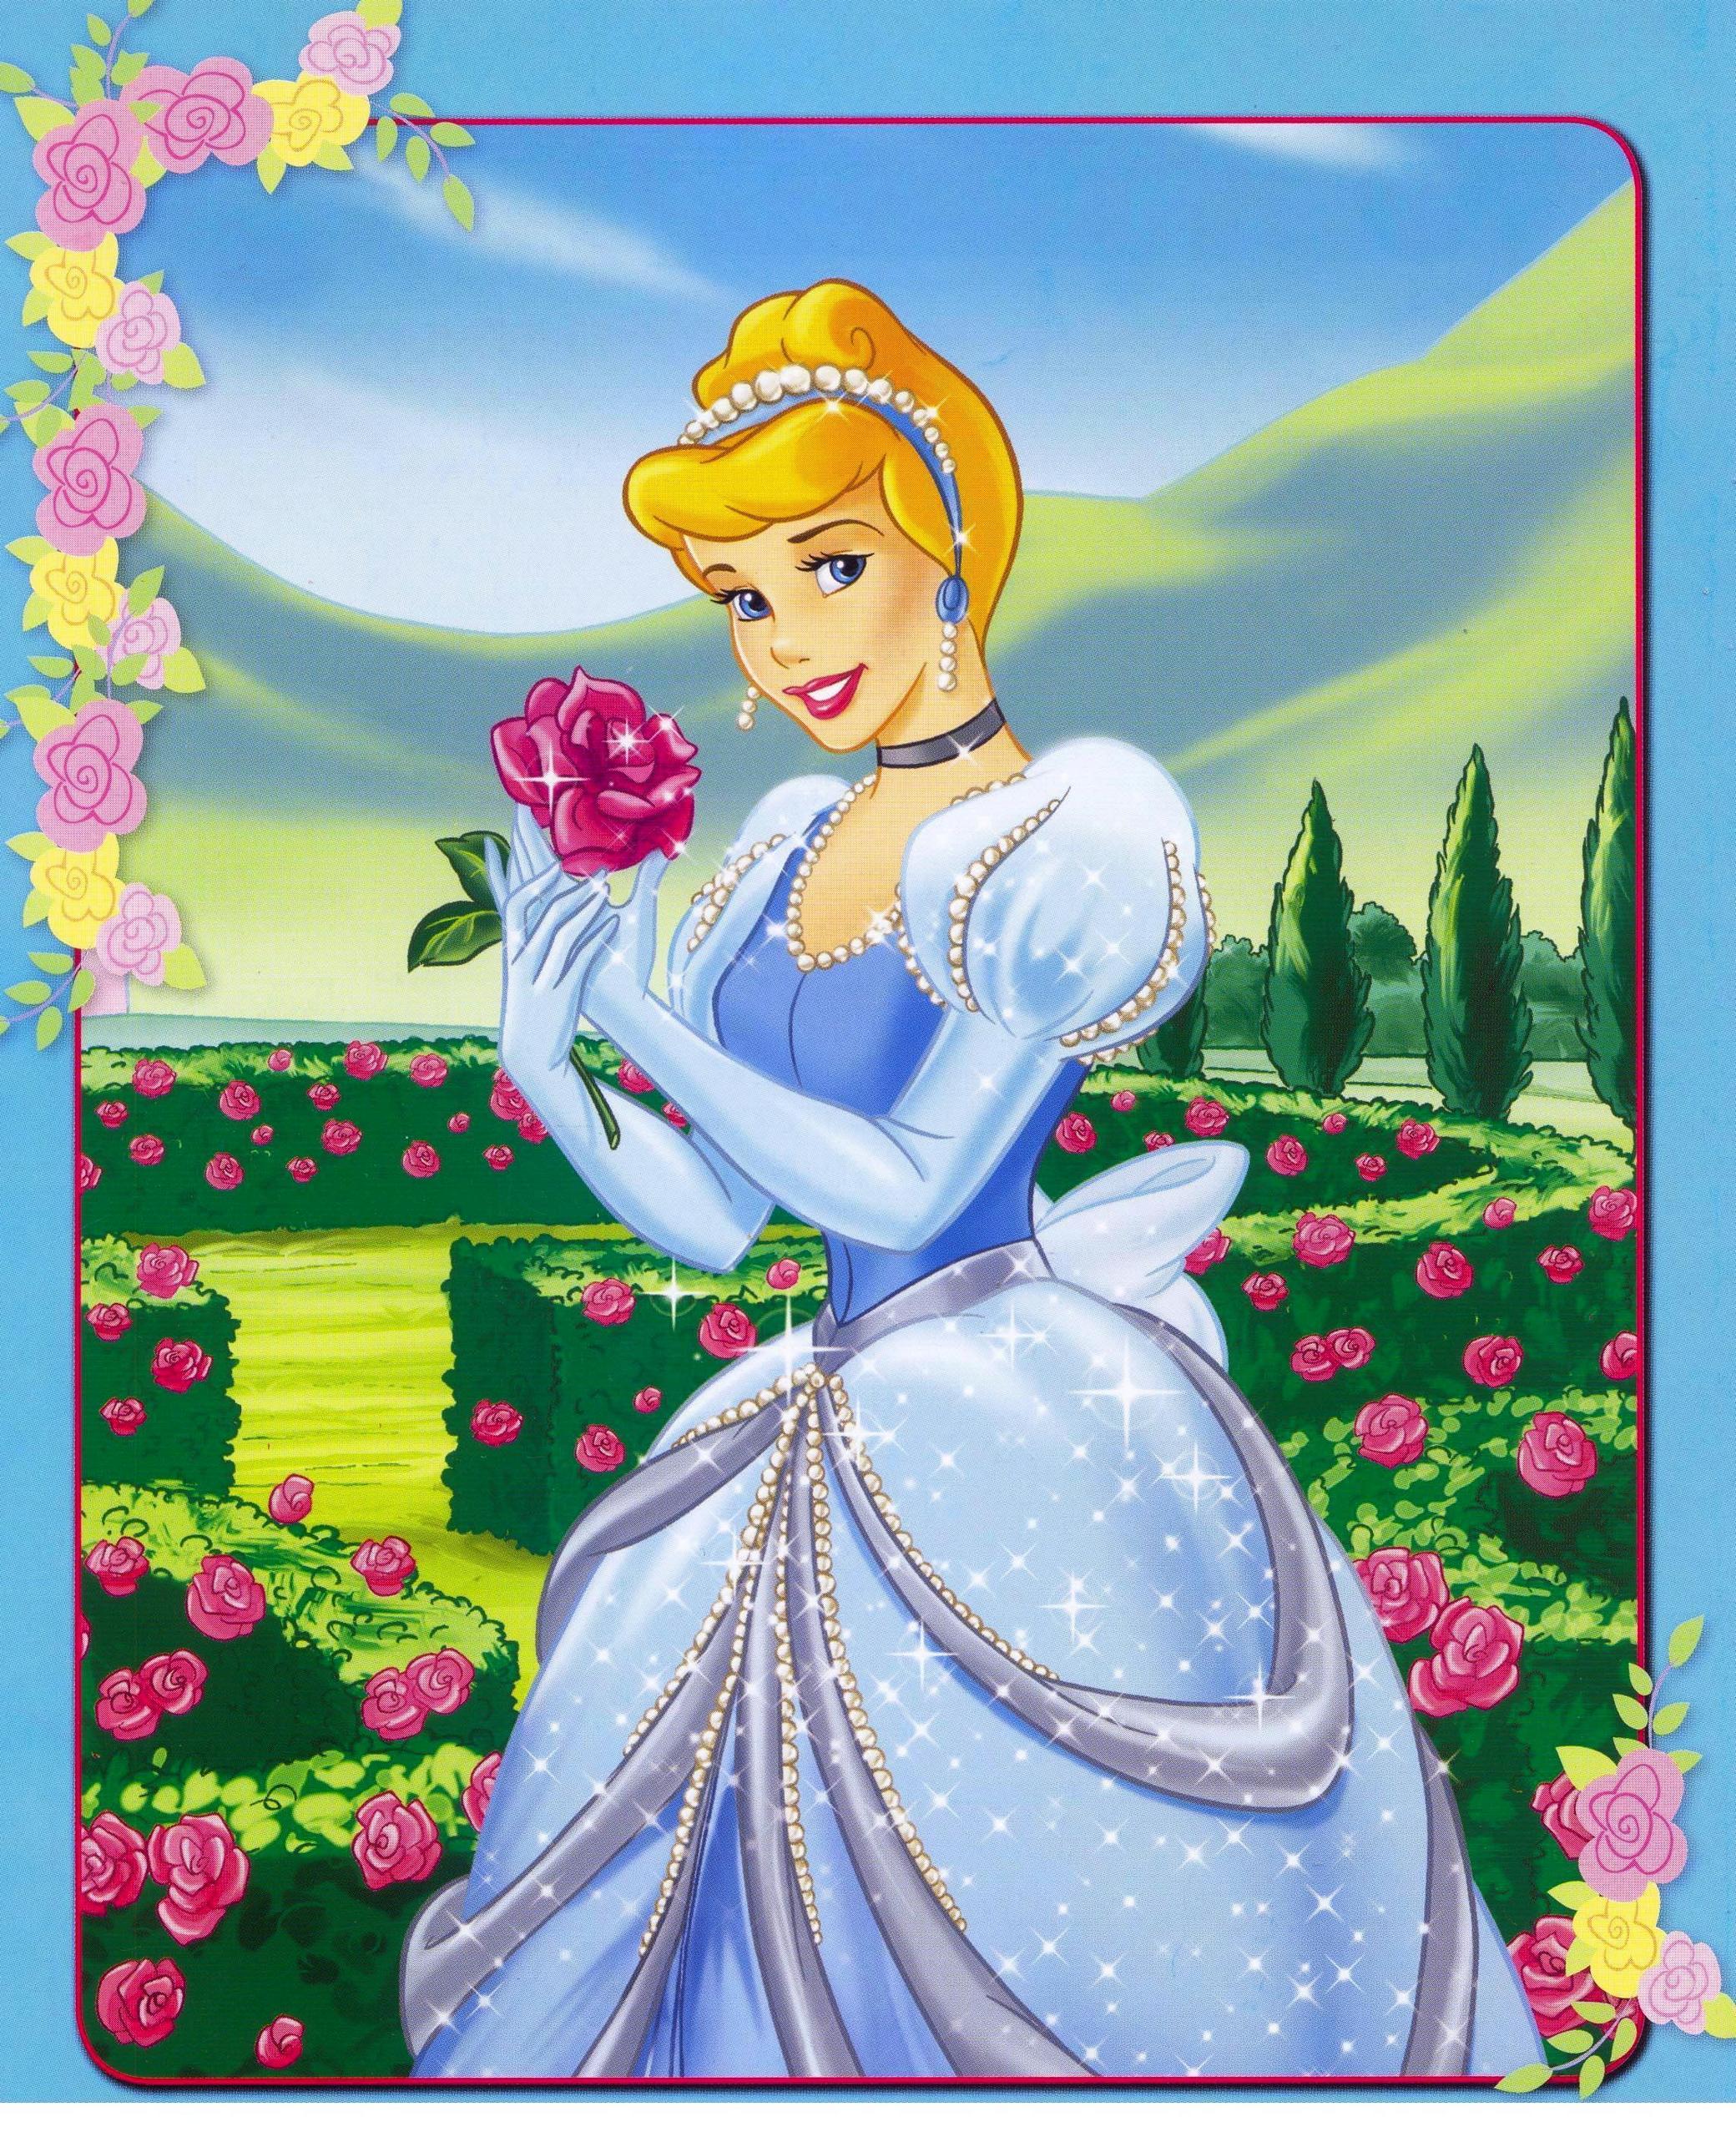 Cinderella Wallpaper for iPhone